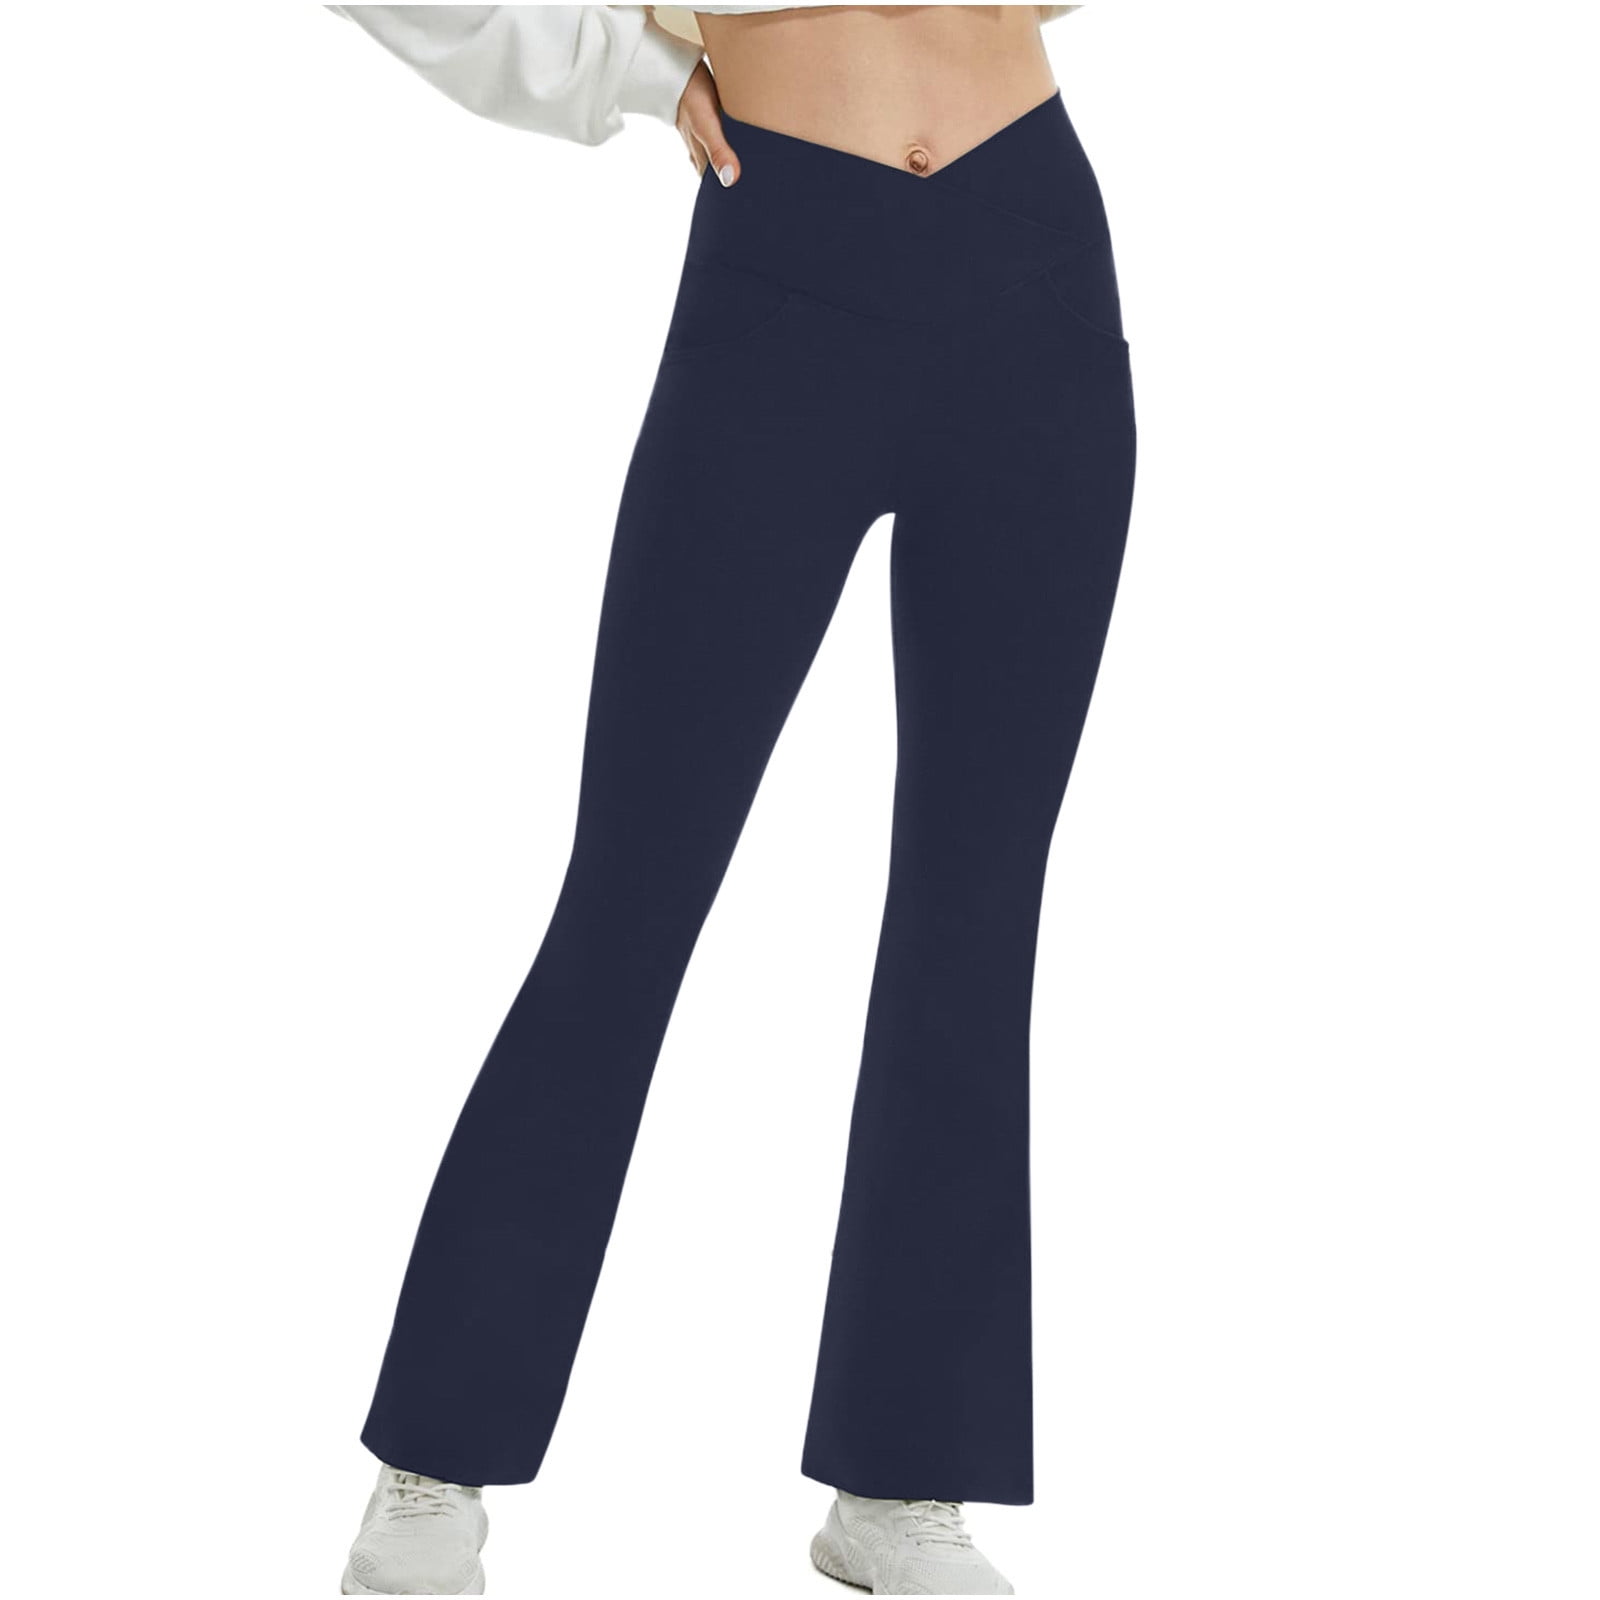  Bootcut Yoga Pants For Women Tummy Control Workout Bootleg  DressPants High Waist 4 Way Stretch Pants Y52A-Navy Blue-M